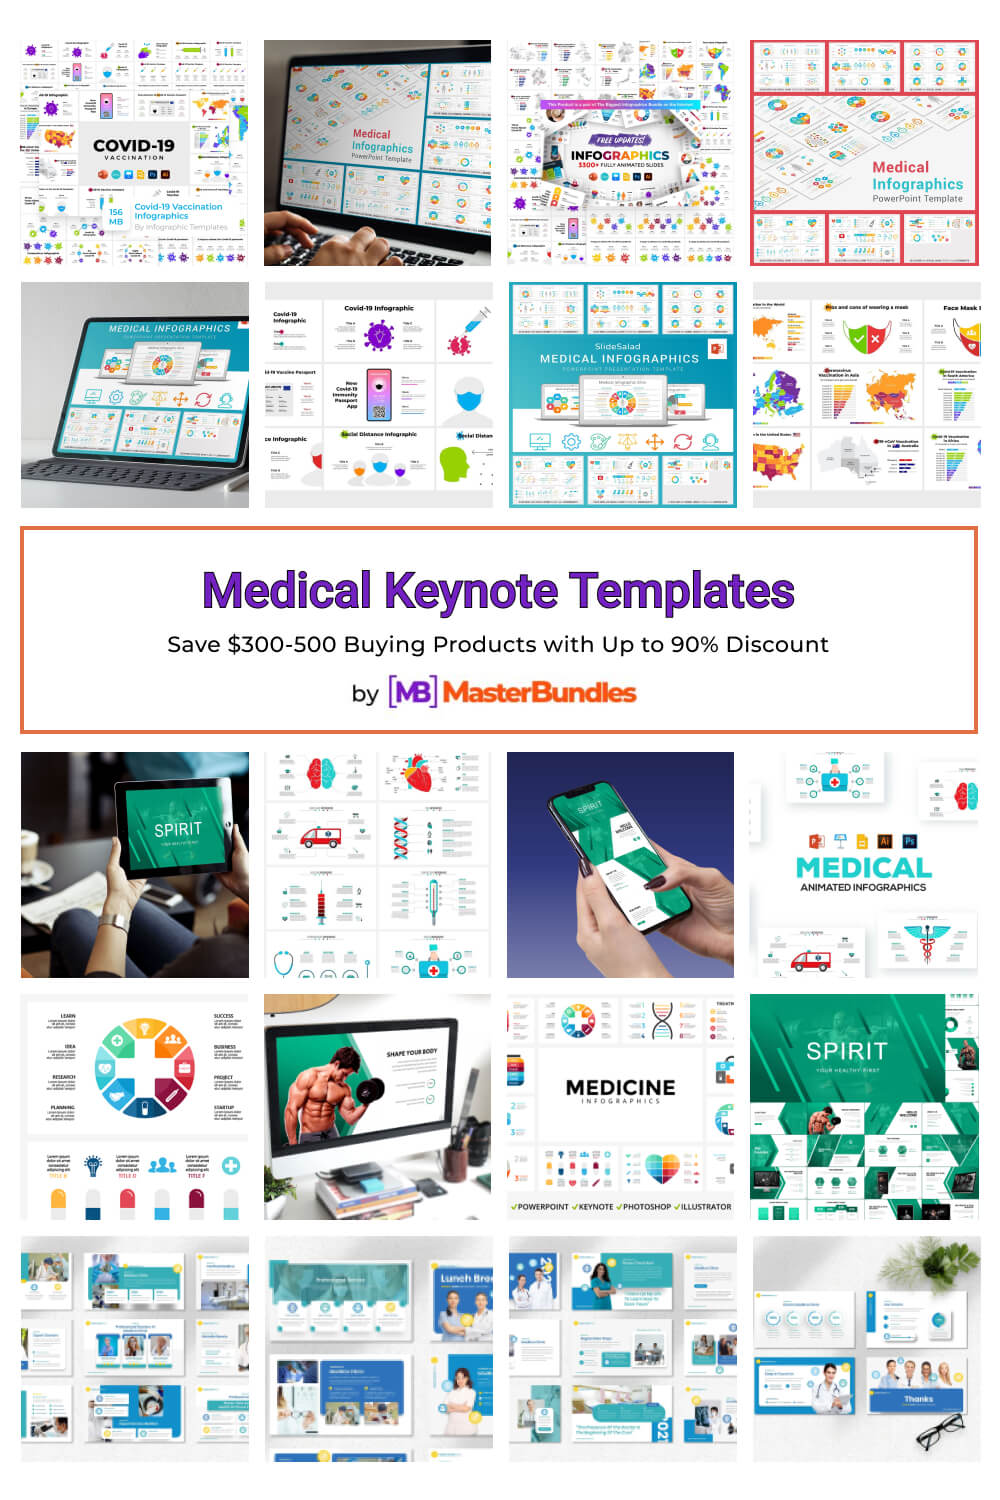 medical keynote templates pinterest image.